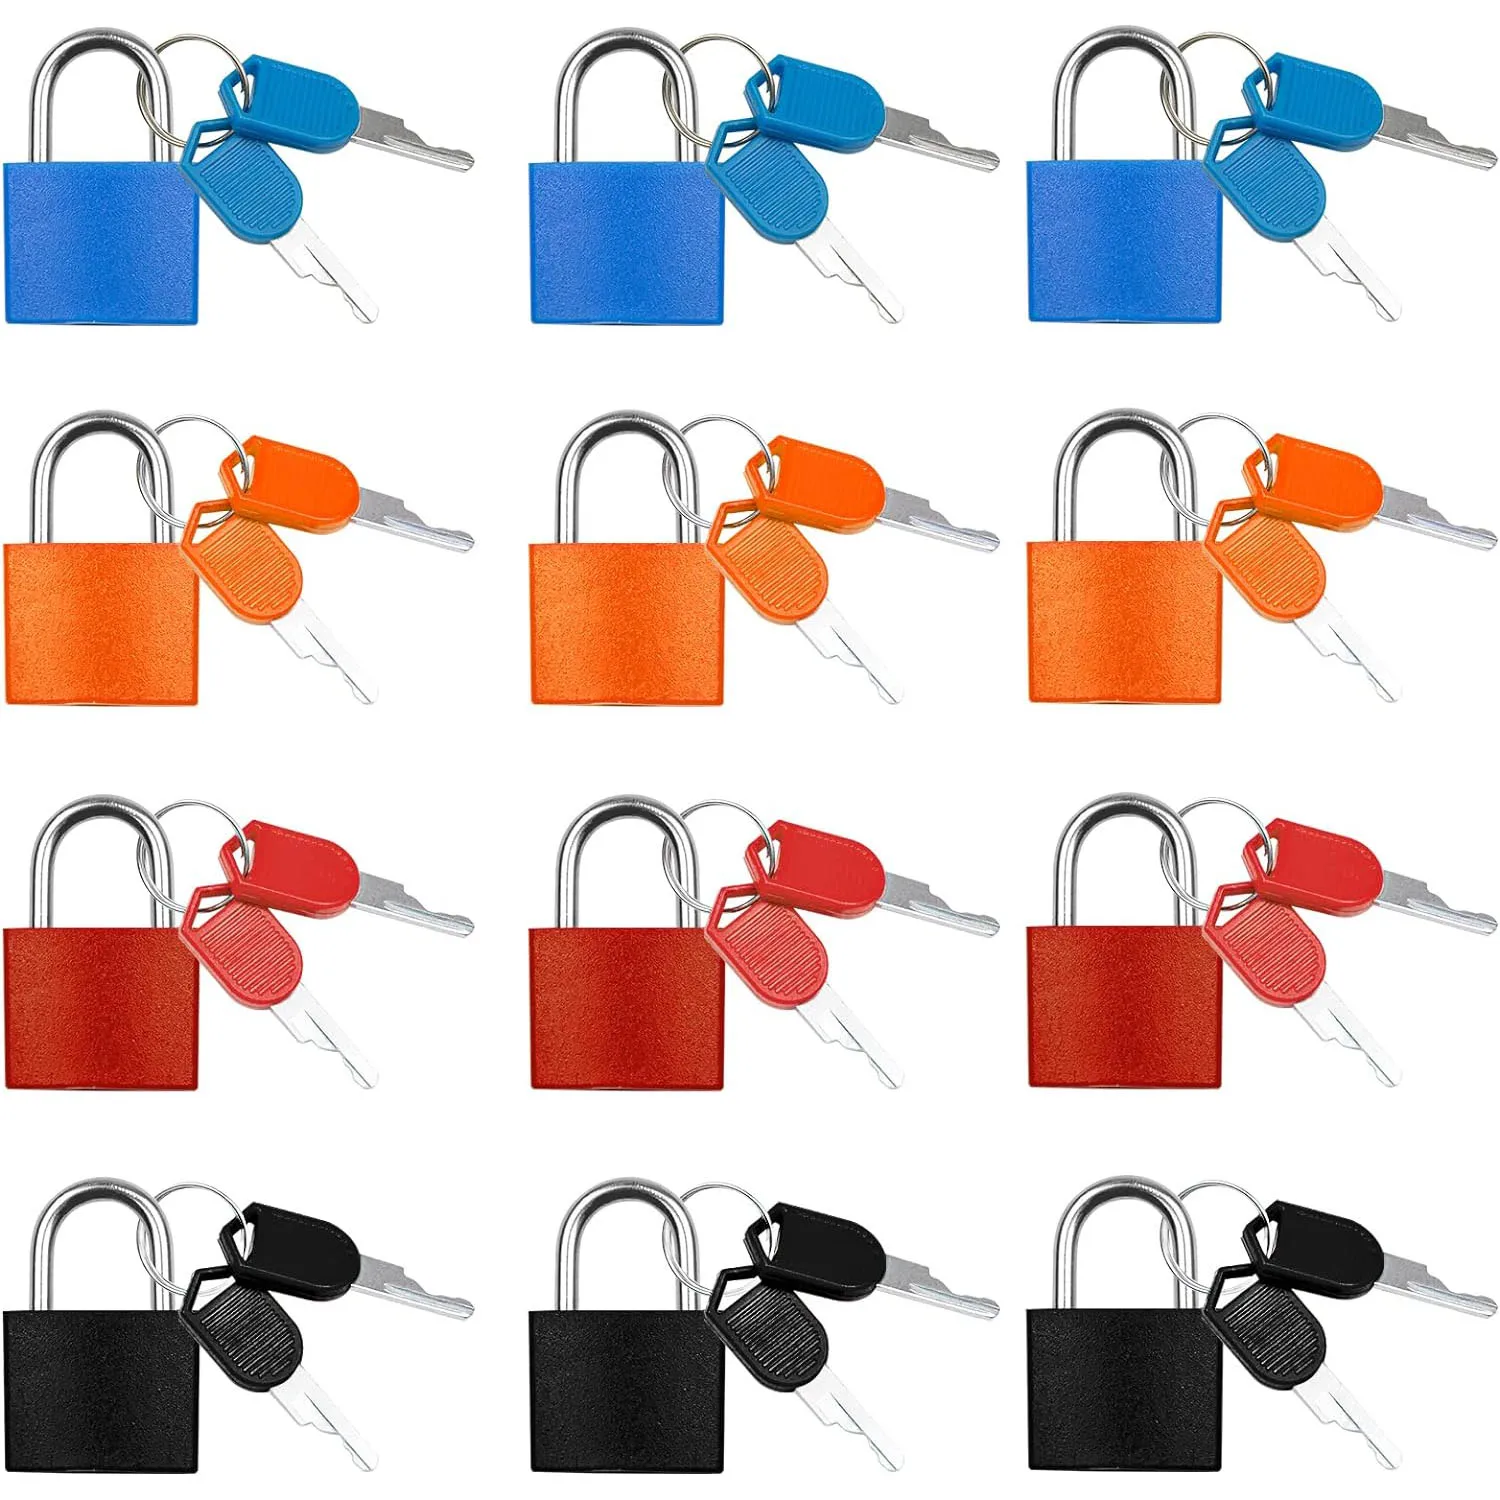 Suitcase Locks with Keys, Small Padlock with Key, Luggage Padlocks, Mini Keyed Padlock for Travel Bags, School Gym Locker